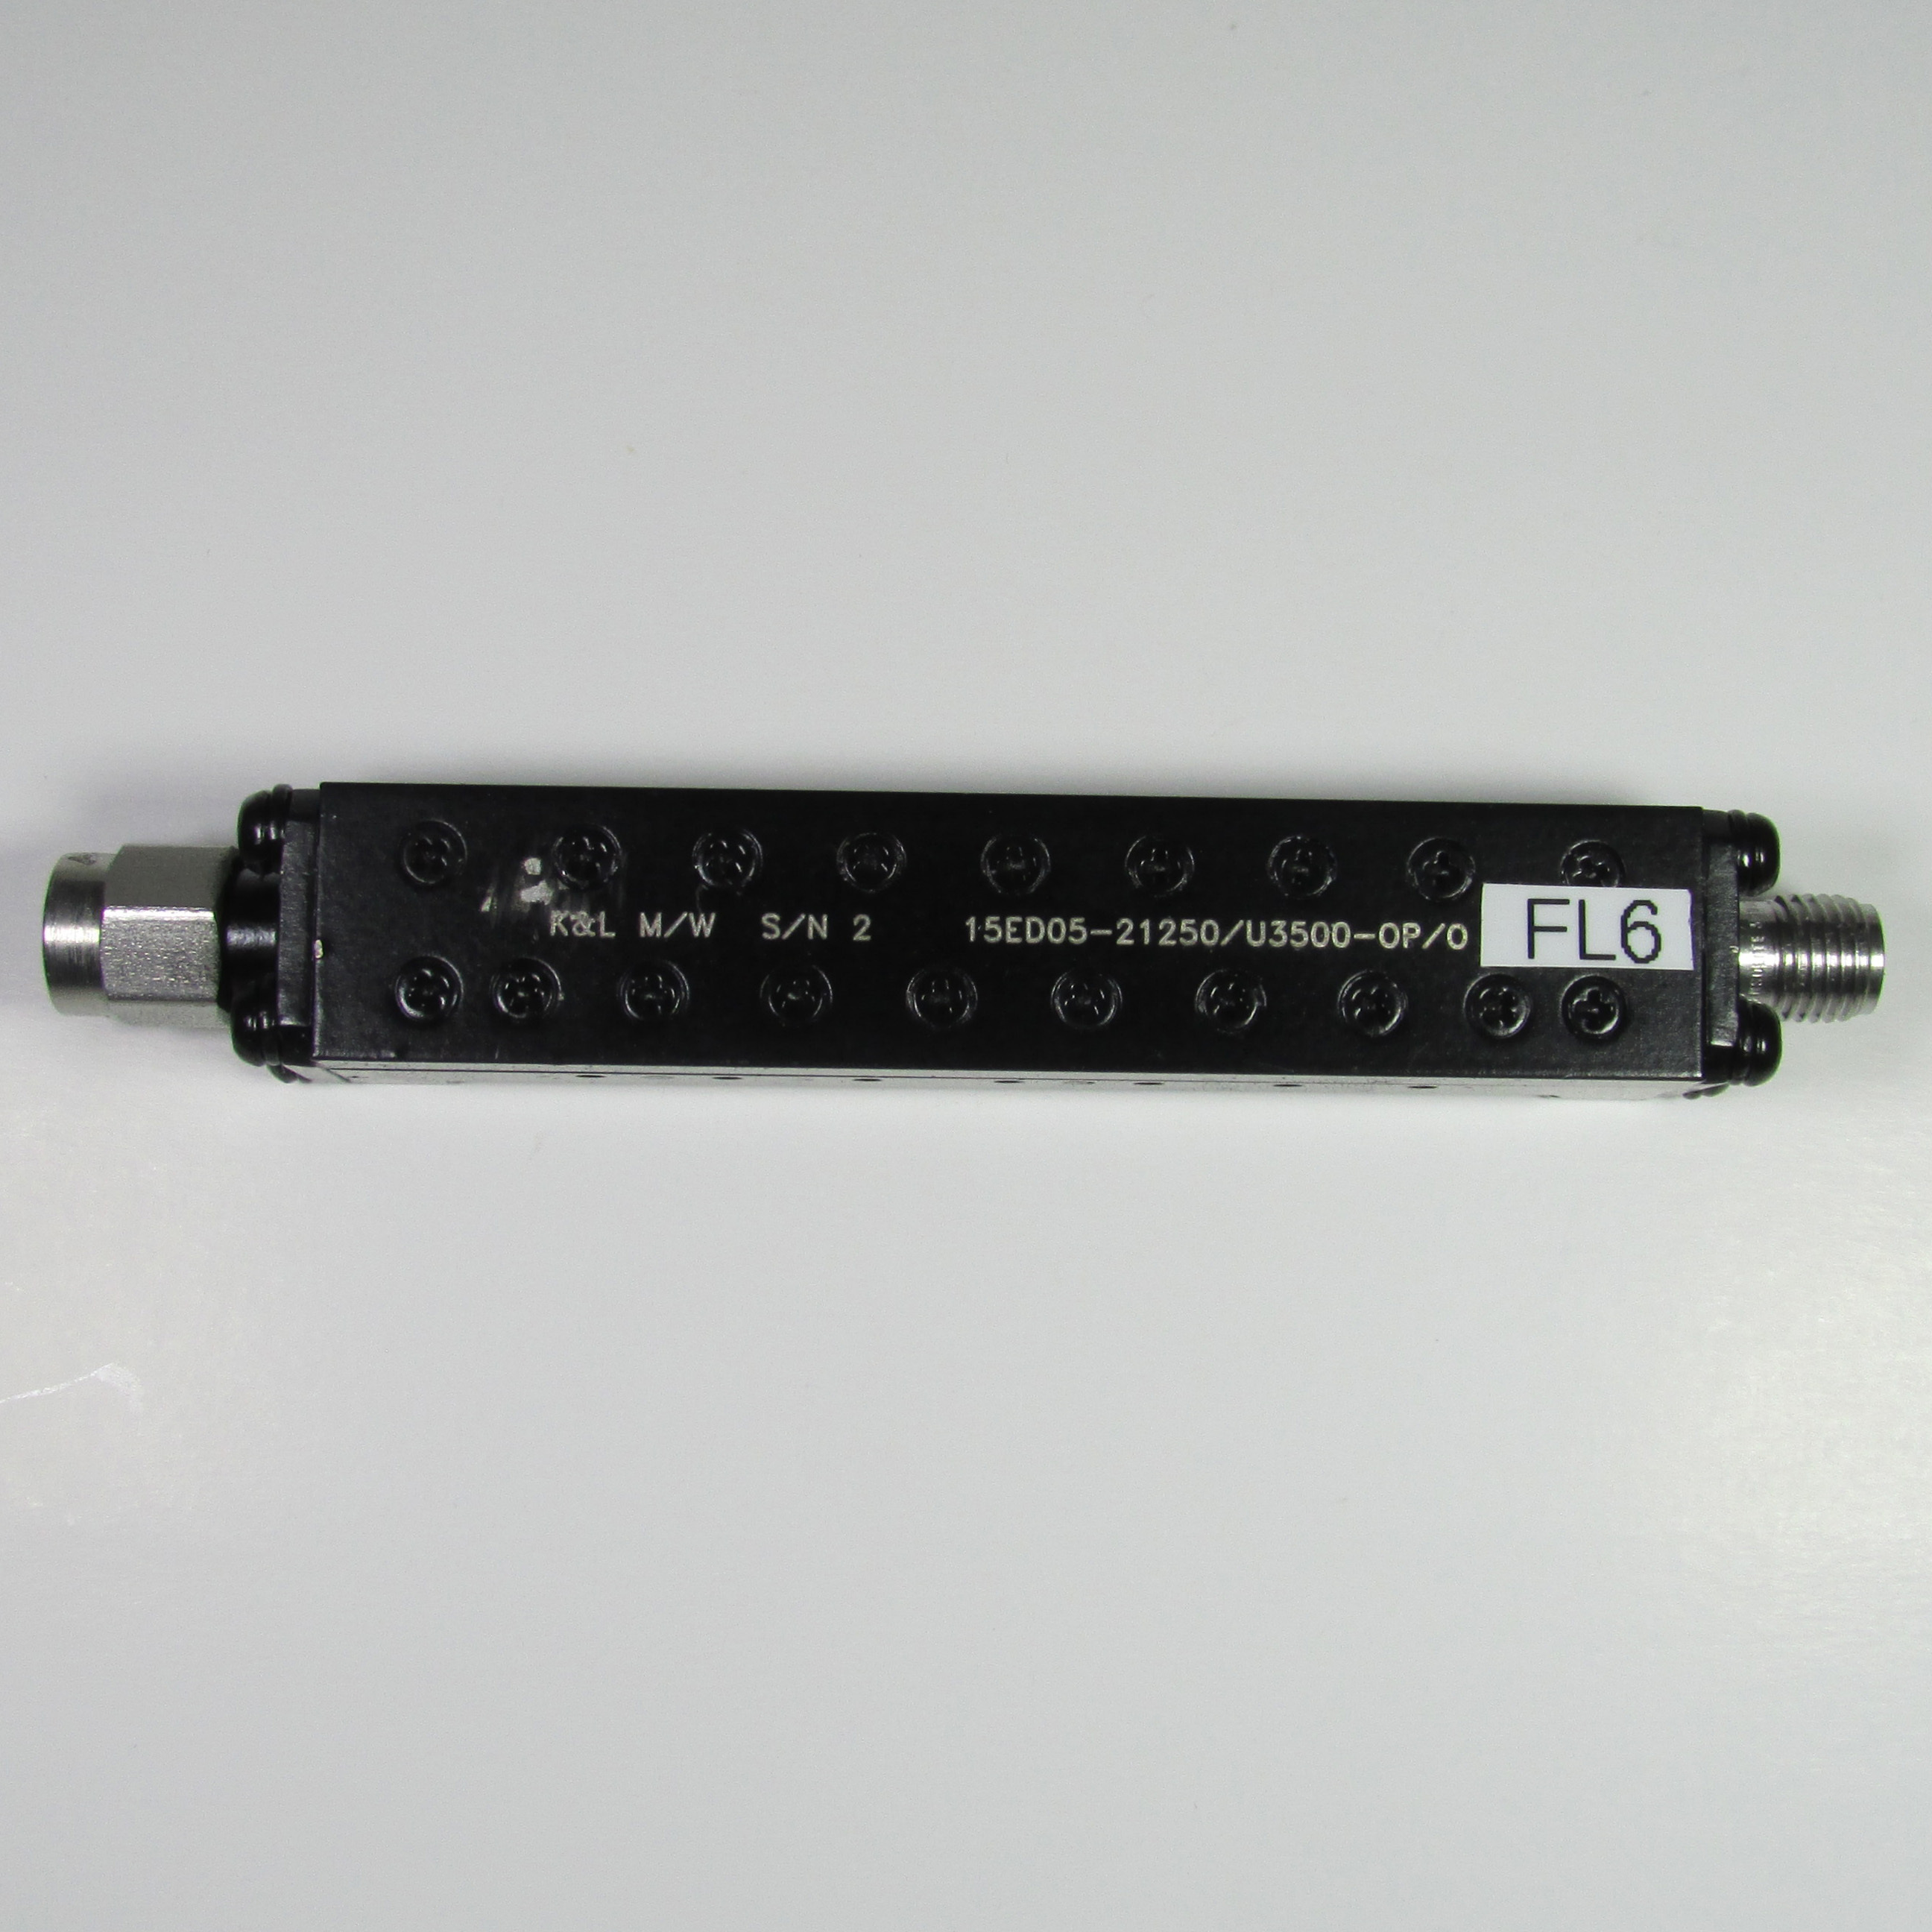 K & L 15ED05-21250 / U3500-OP / O 21.25GHz SMA microwave coaxial bandpass filter